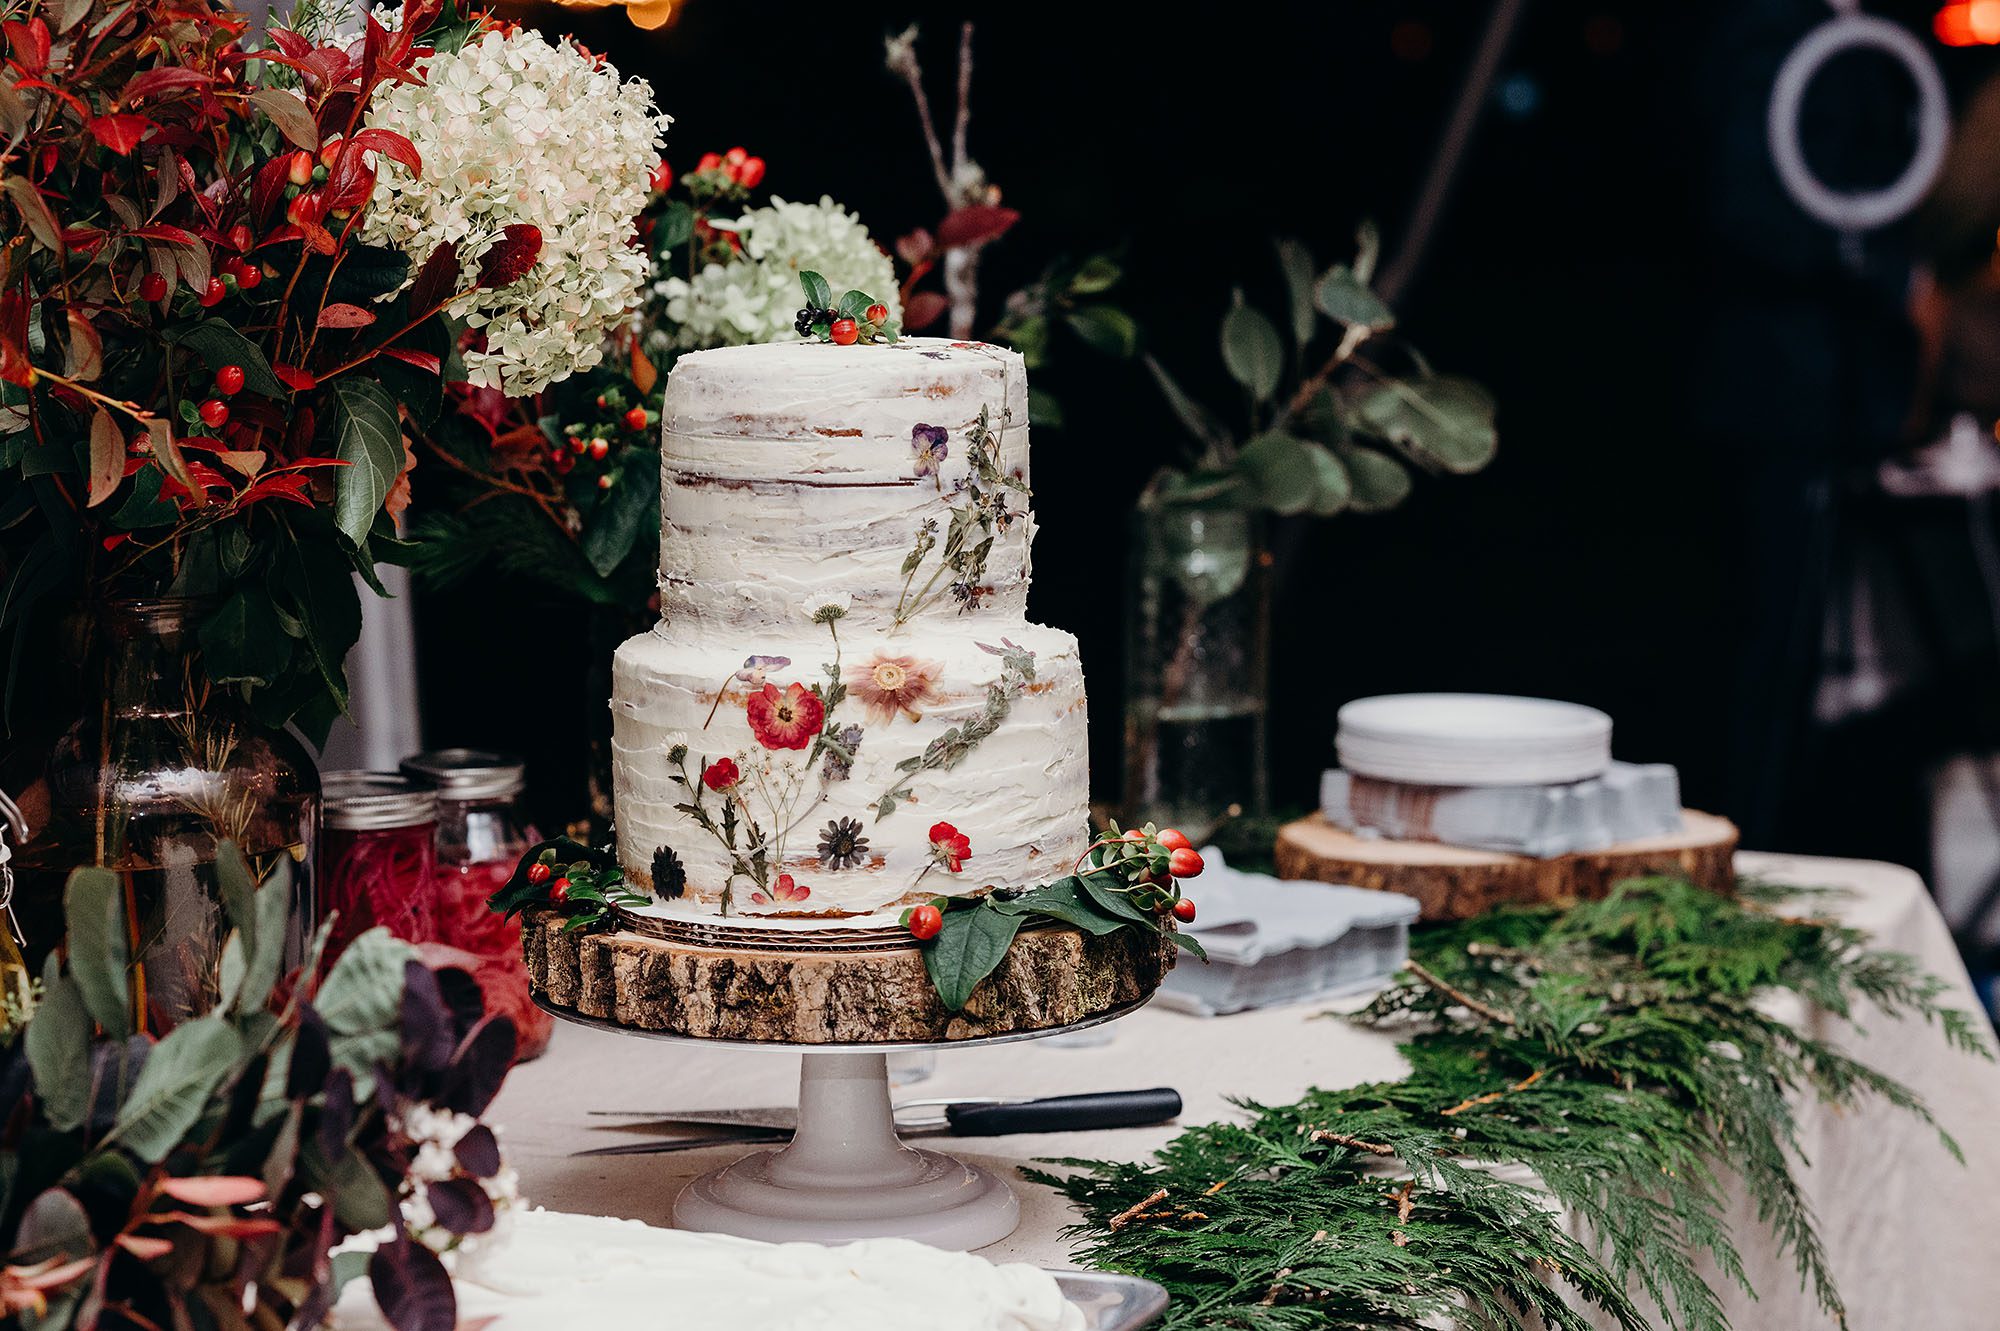 Long Beach Peninsula Wedding Cake at Reception by Briana Morrison Photography